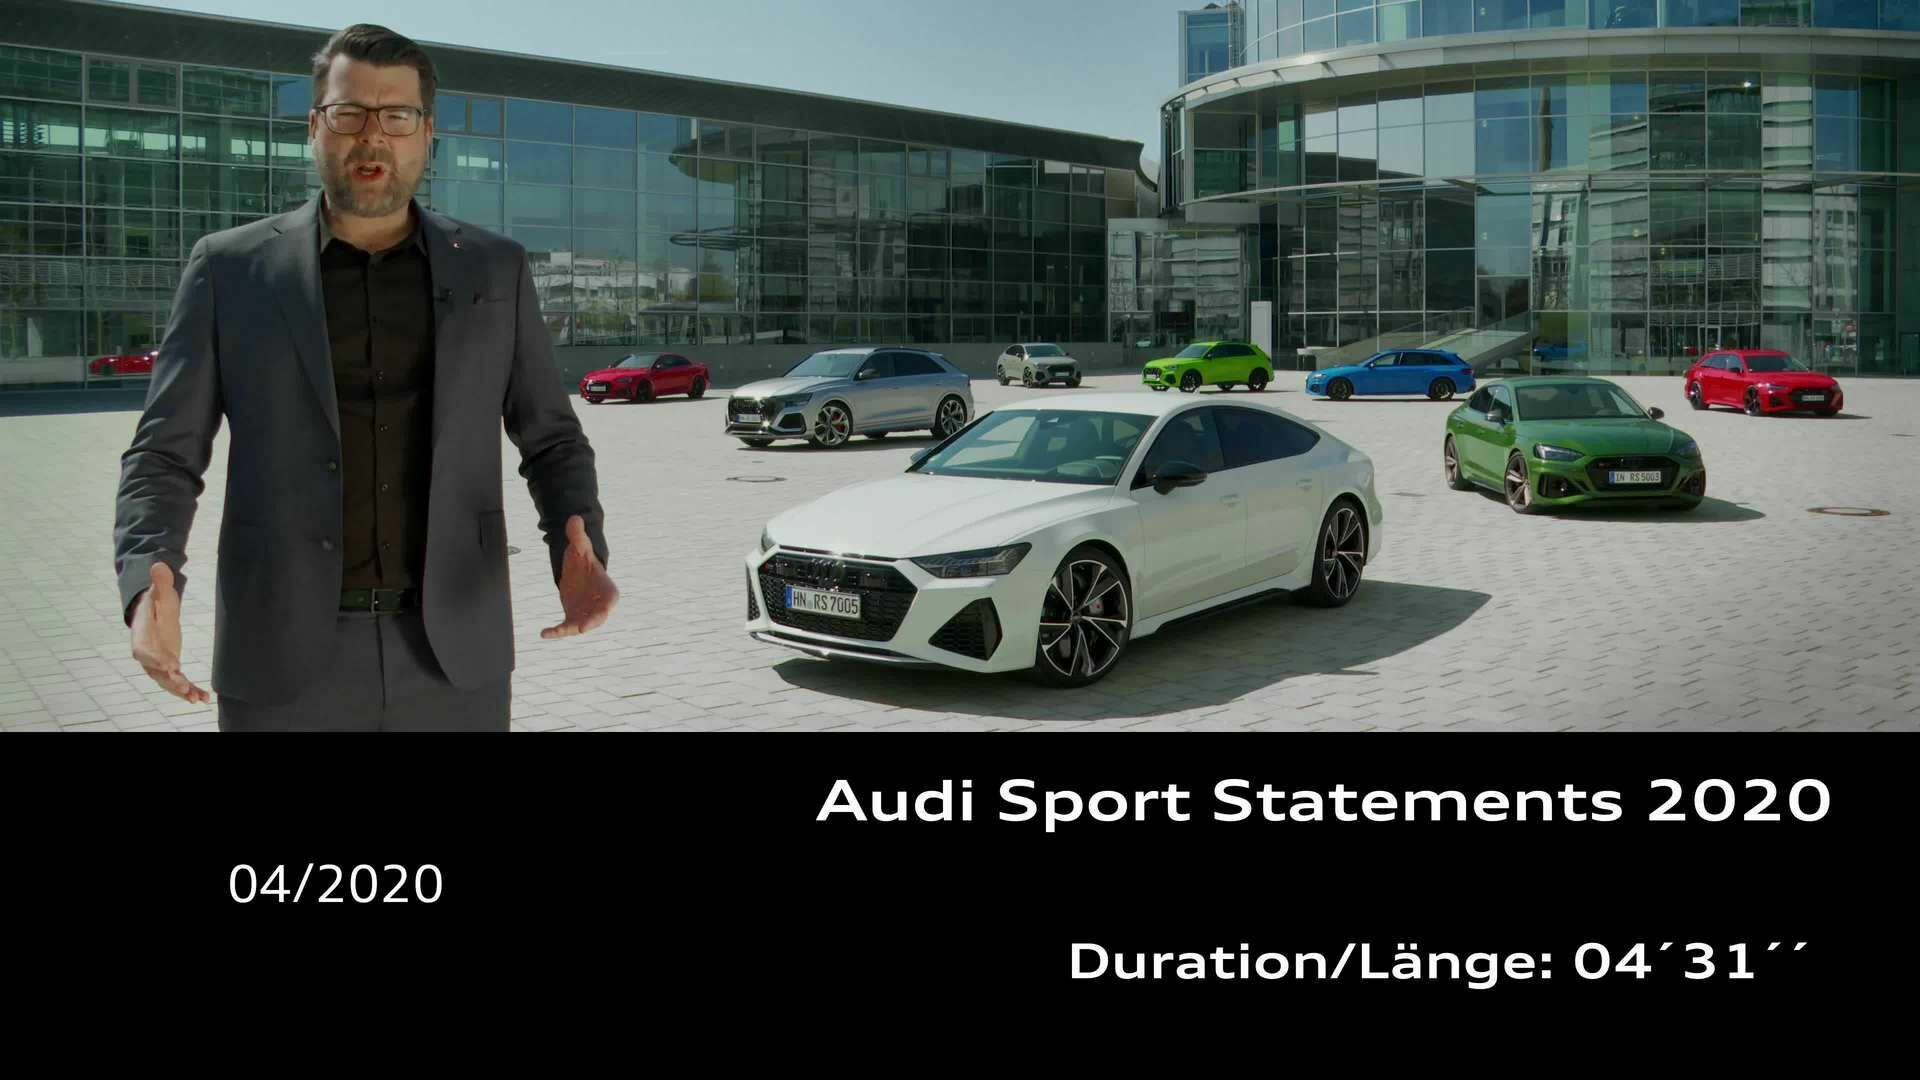 Footage: Statement Oliver Hoffmann über die Audi RS Modelle